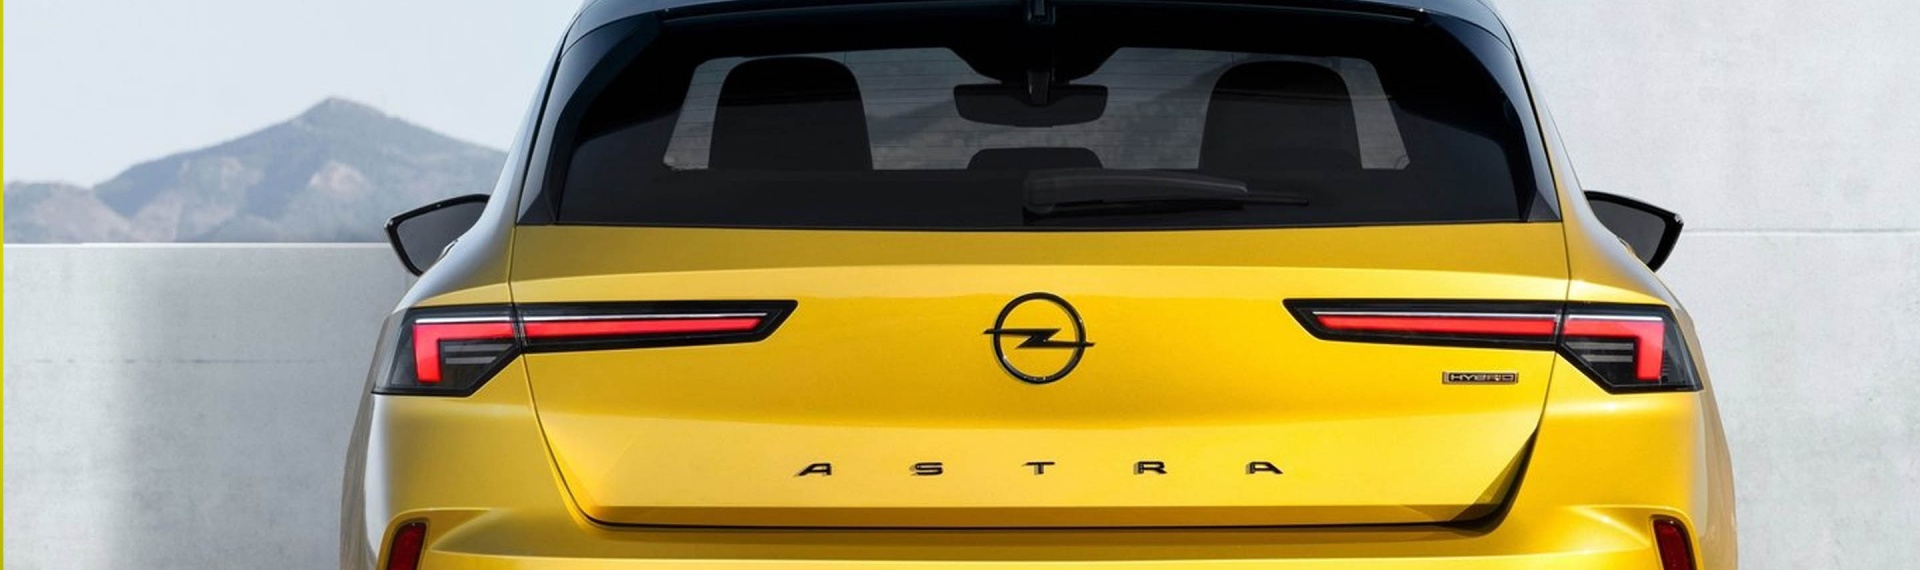 Opel Astra P3